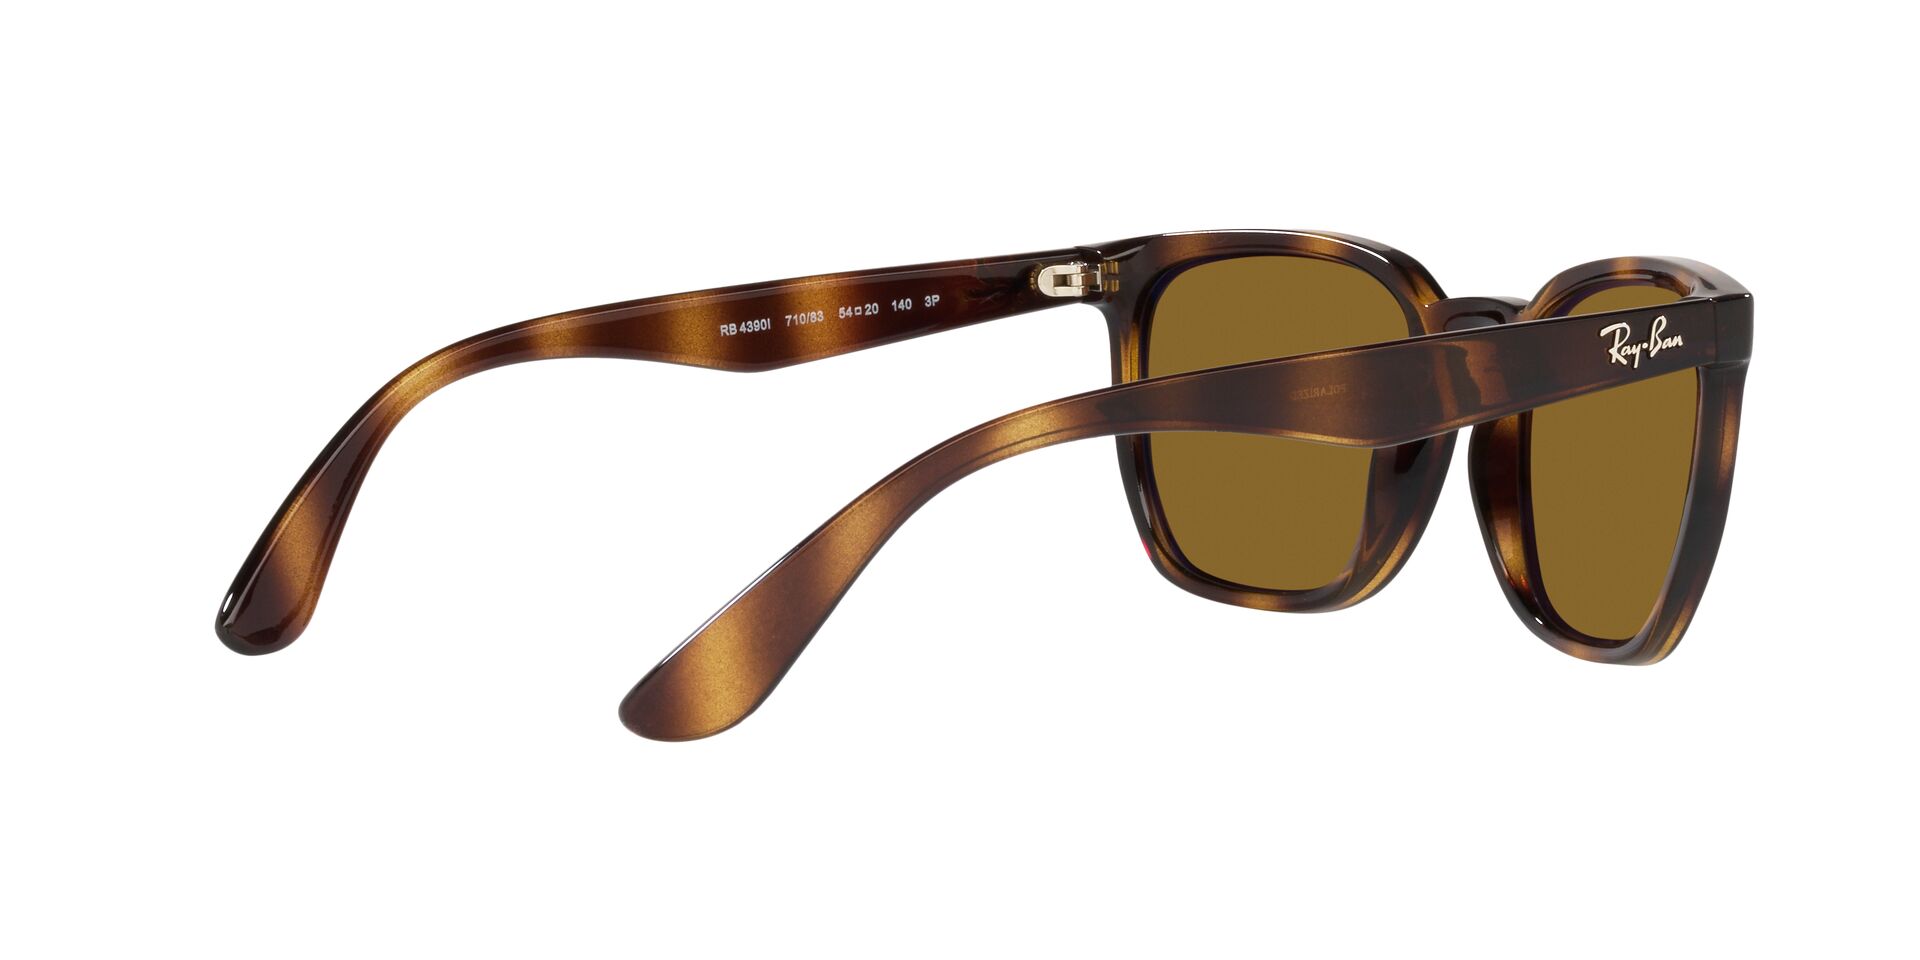 Buy Ray-Ban Essentials Sunglasses Online.